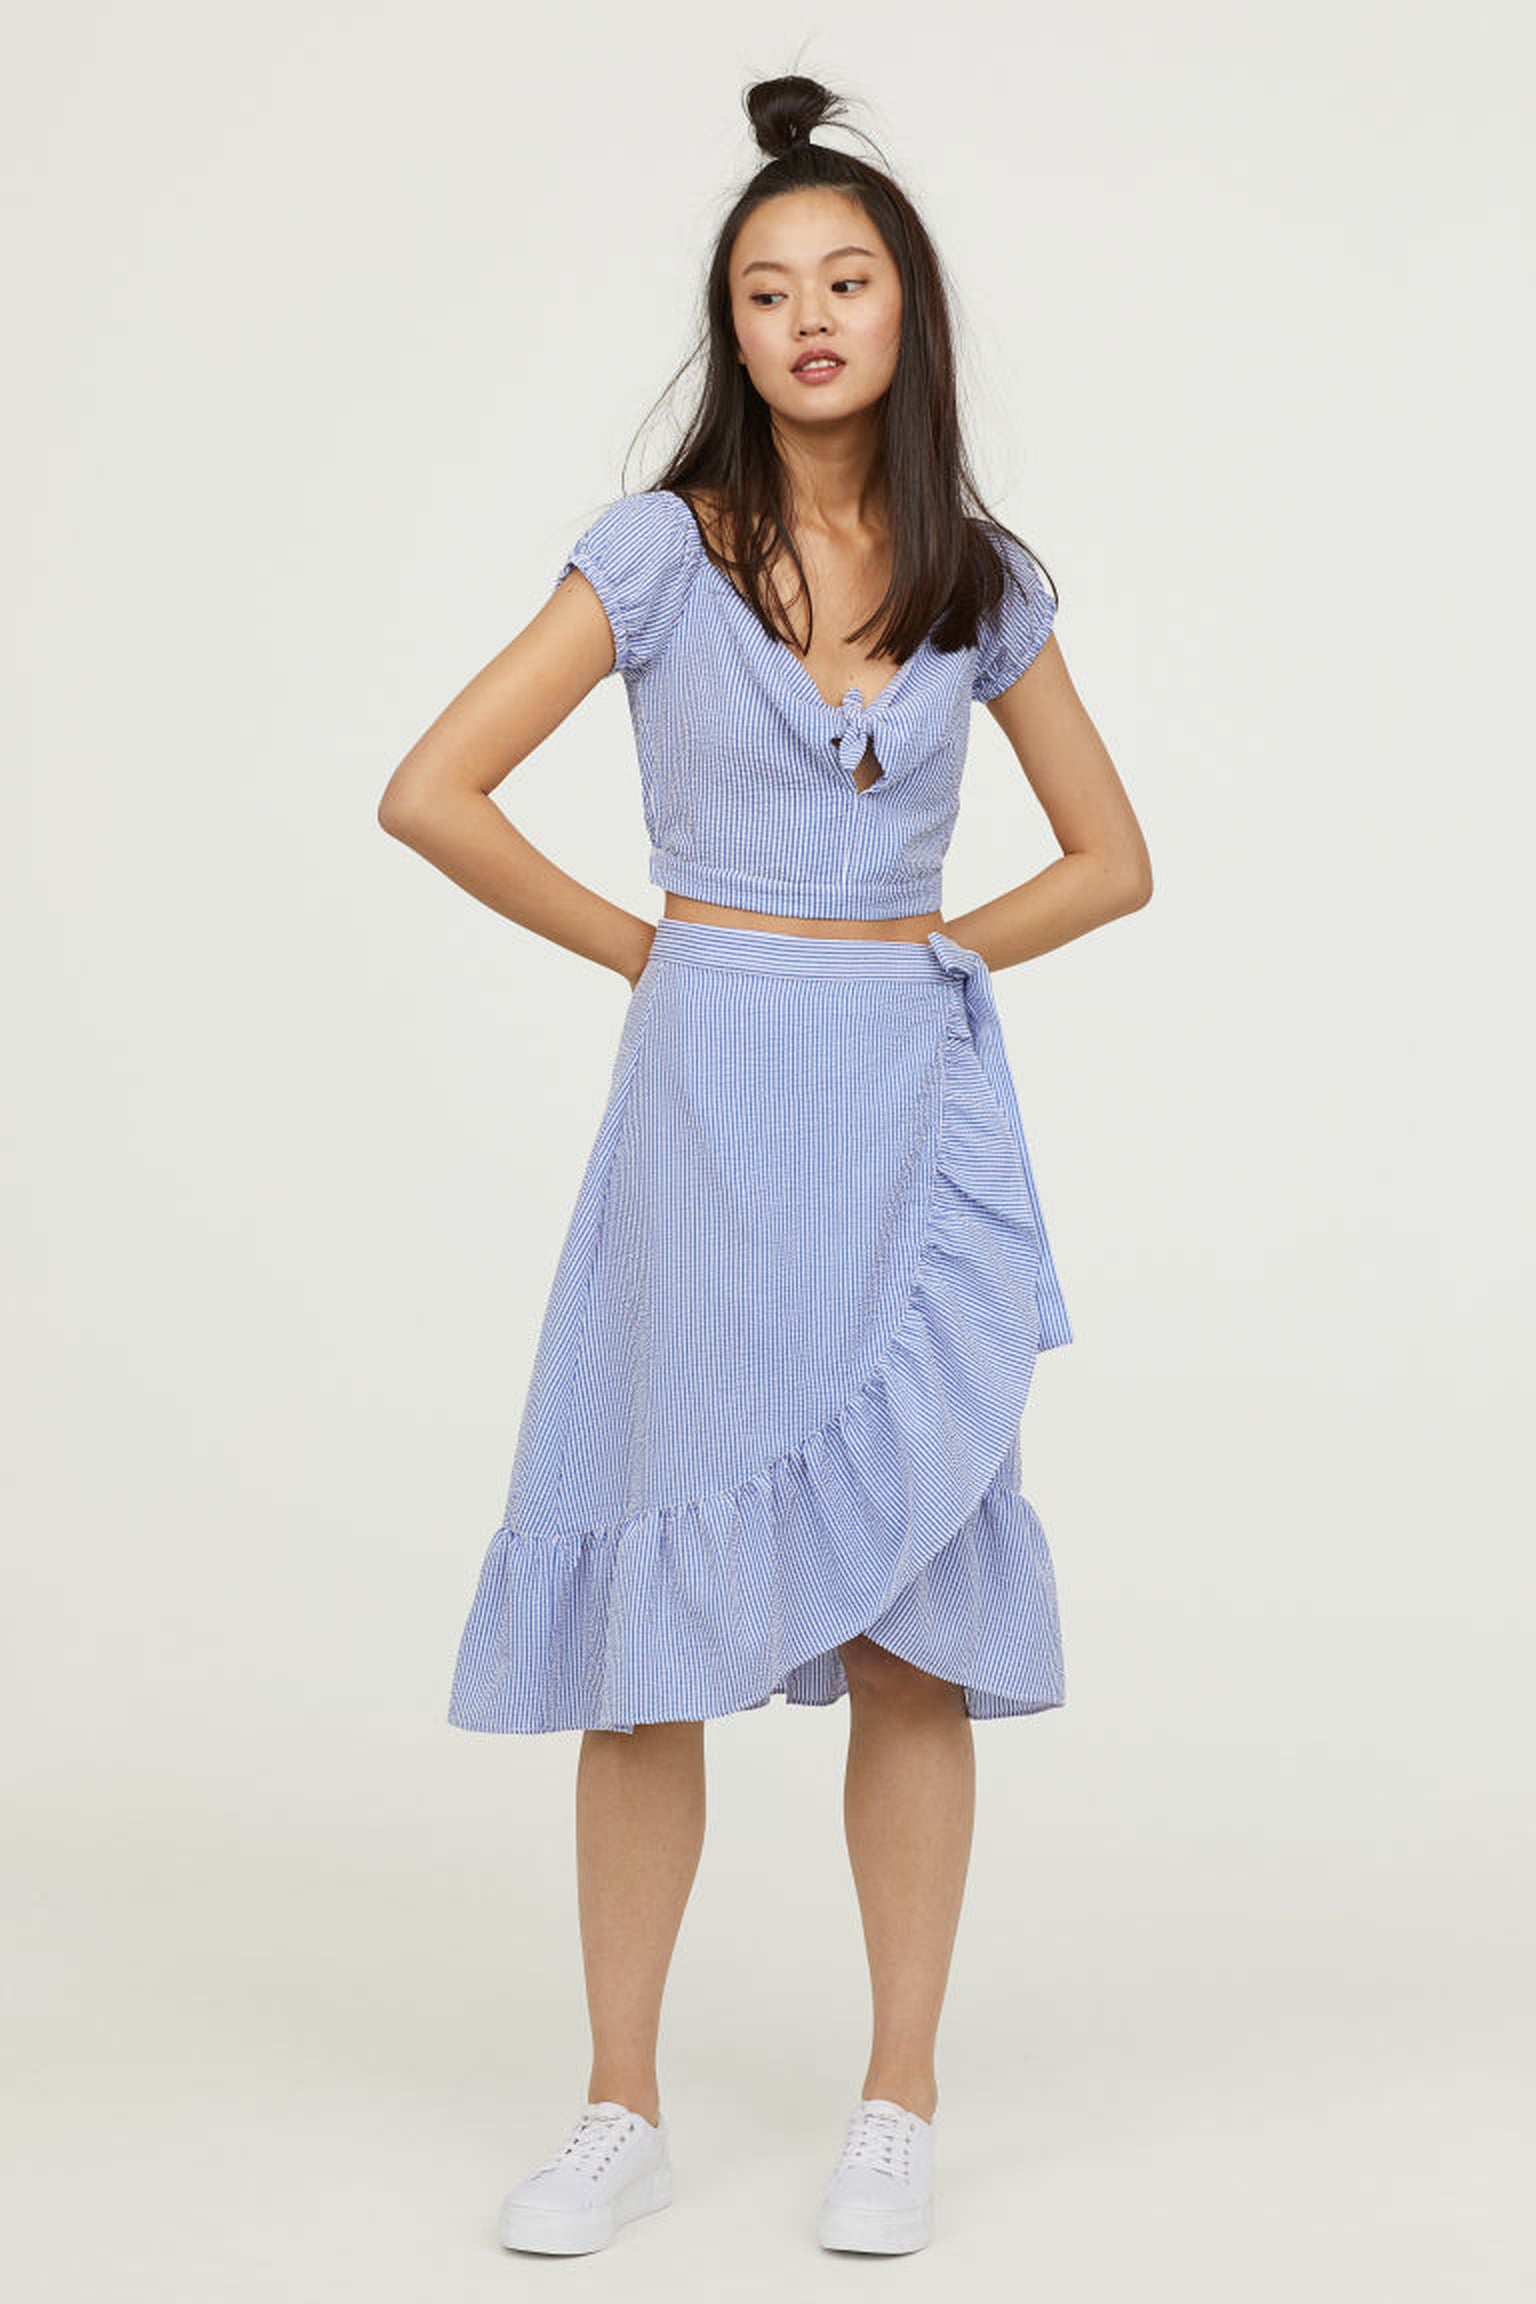 How to Wear a Wrap Skirt 2018 | POPSUGAR Fashion